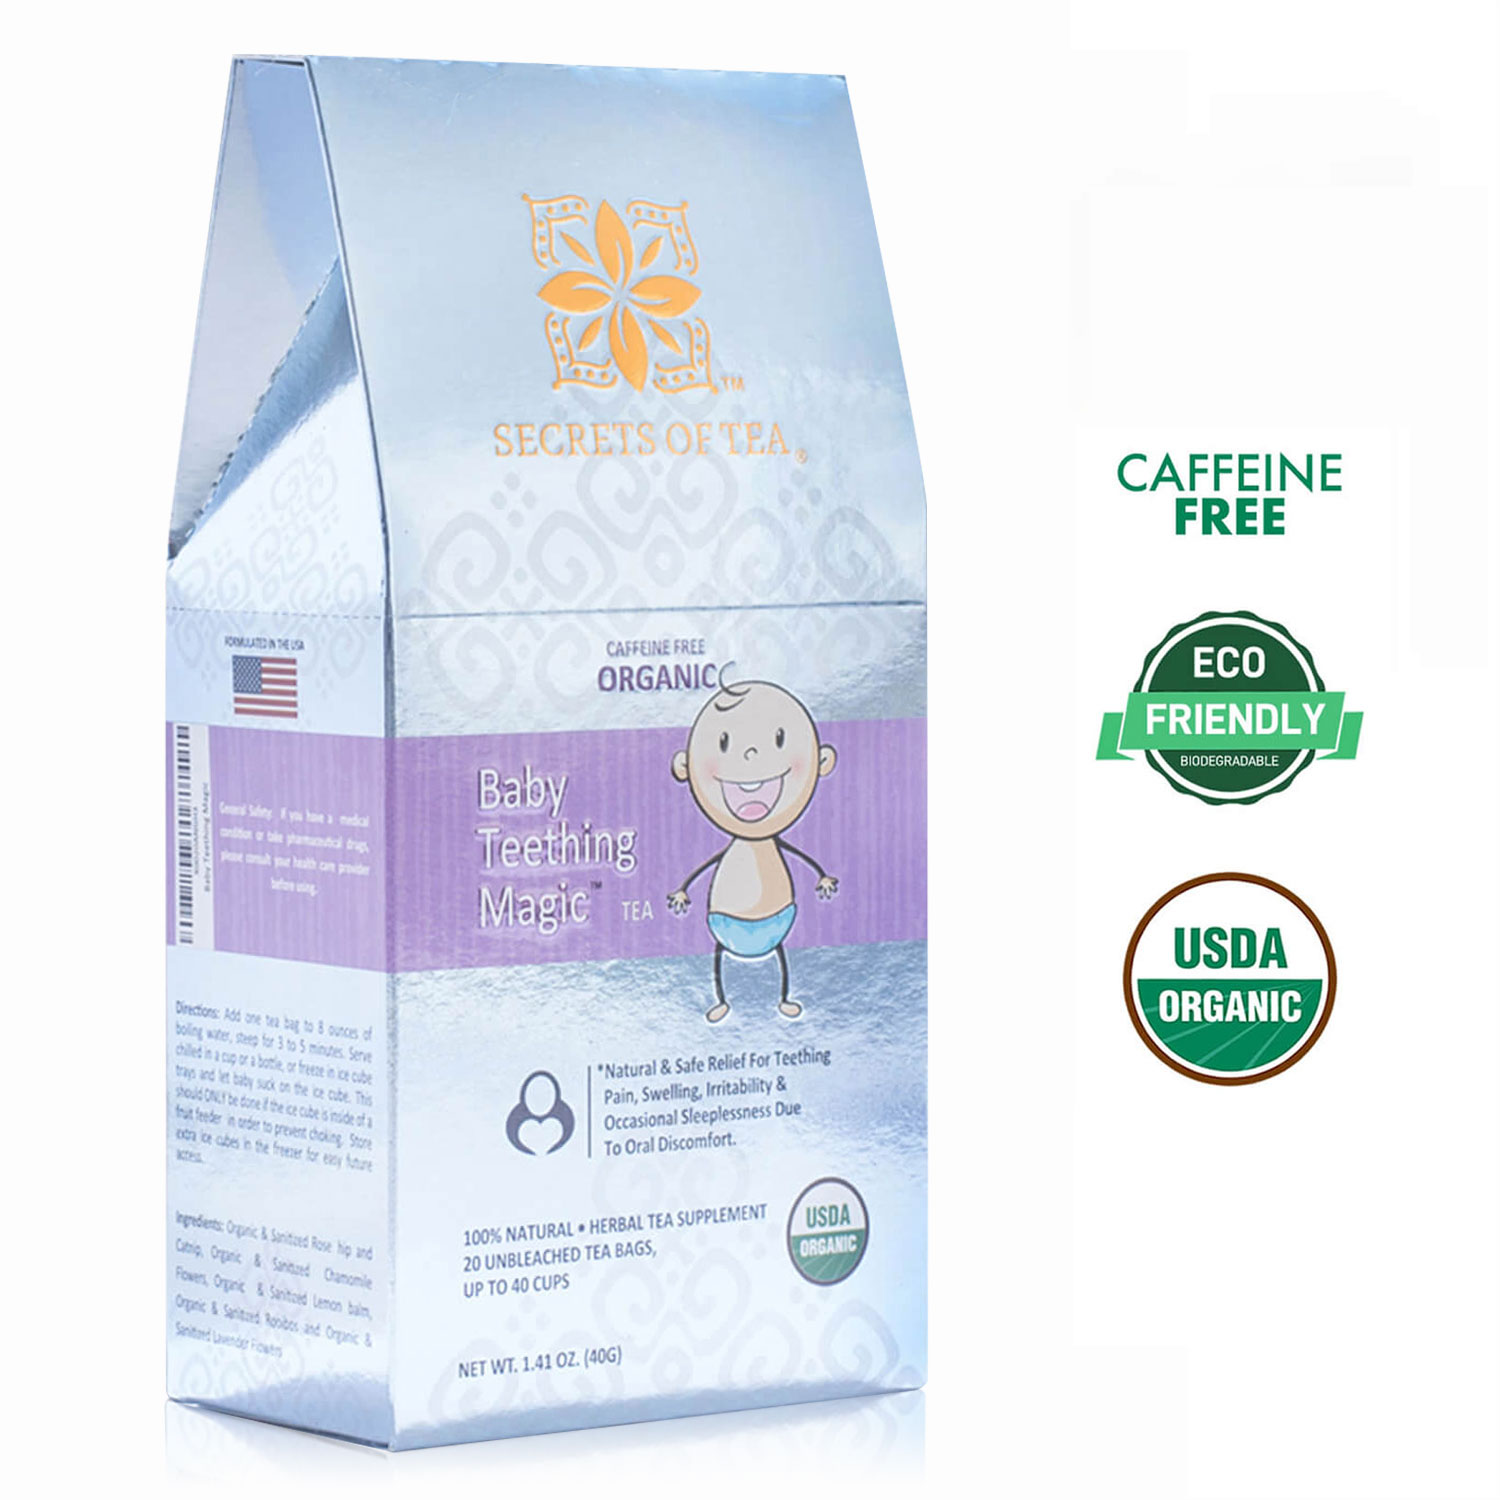 Secrets of Tea Baby Teething Magic Tea 4 innerpacks per case 2.0 oz